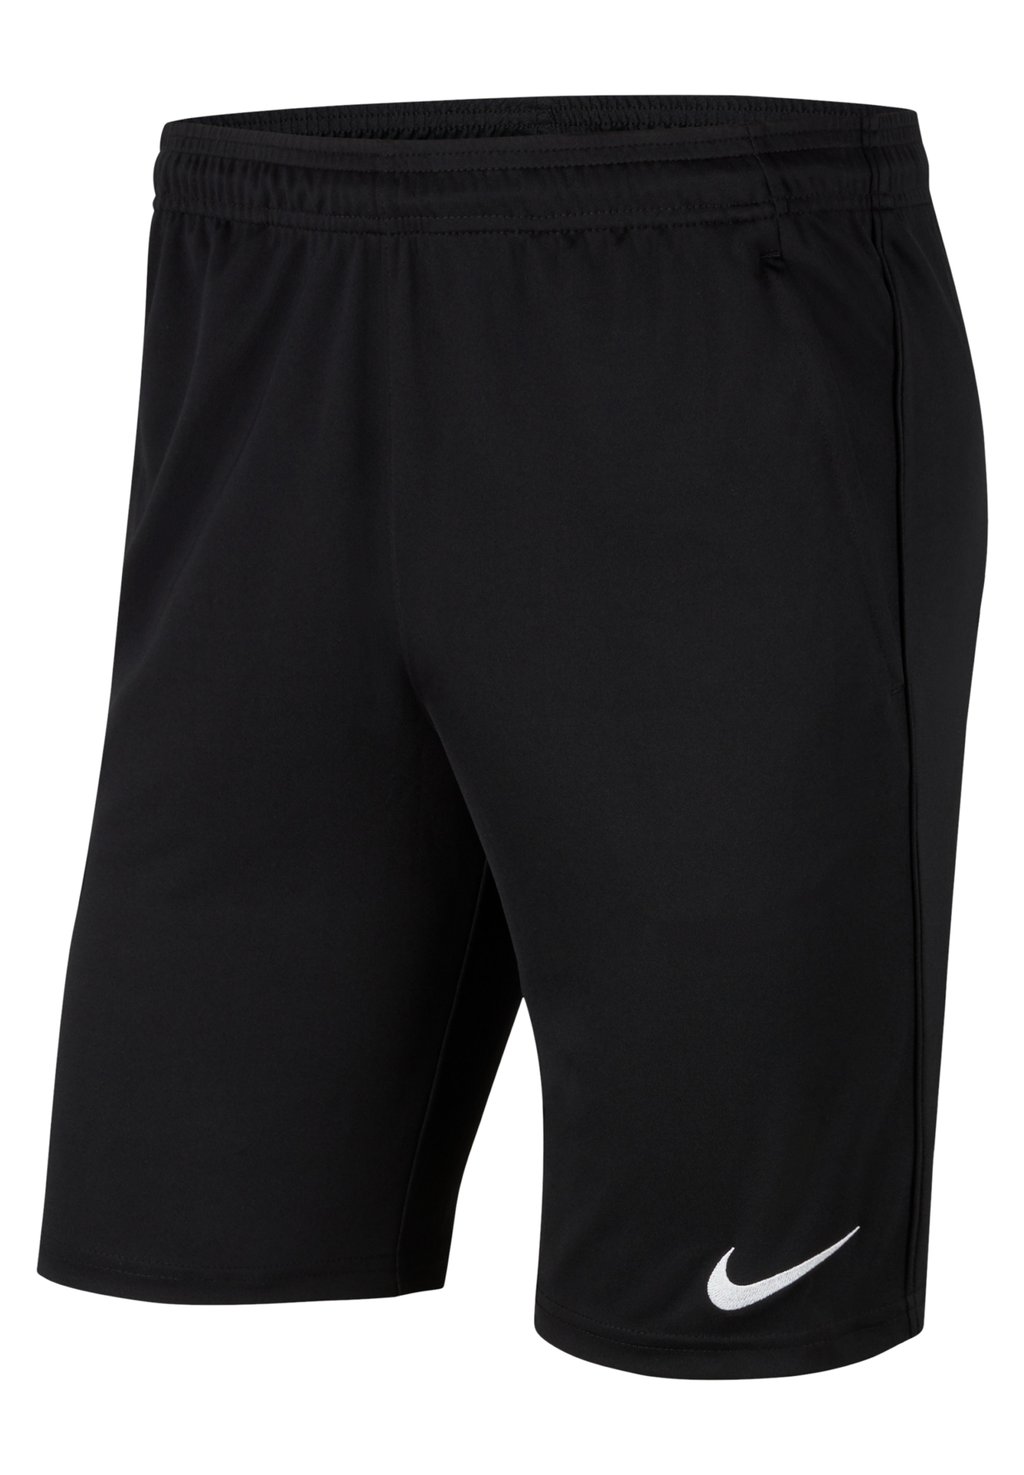 Короткие спортивные штаны Nike, цвет schwarzweiss футболка базовая teamsport nike цвет schwarzweiss